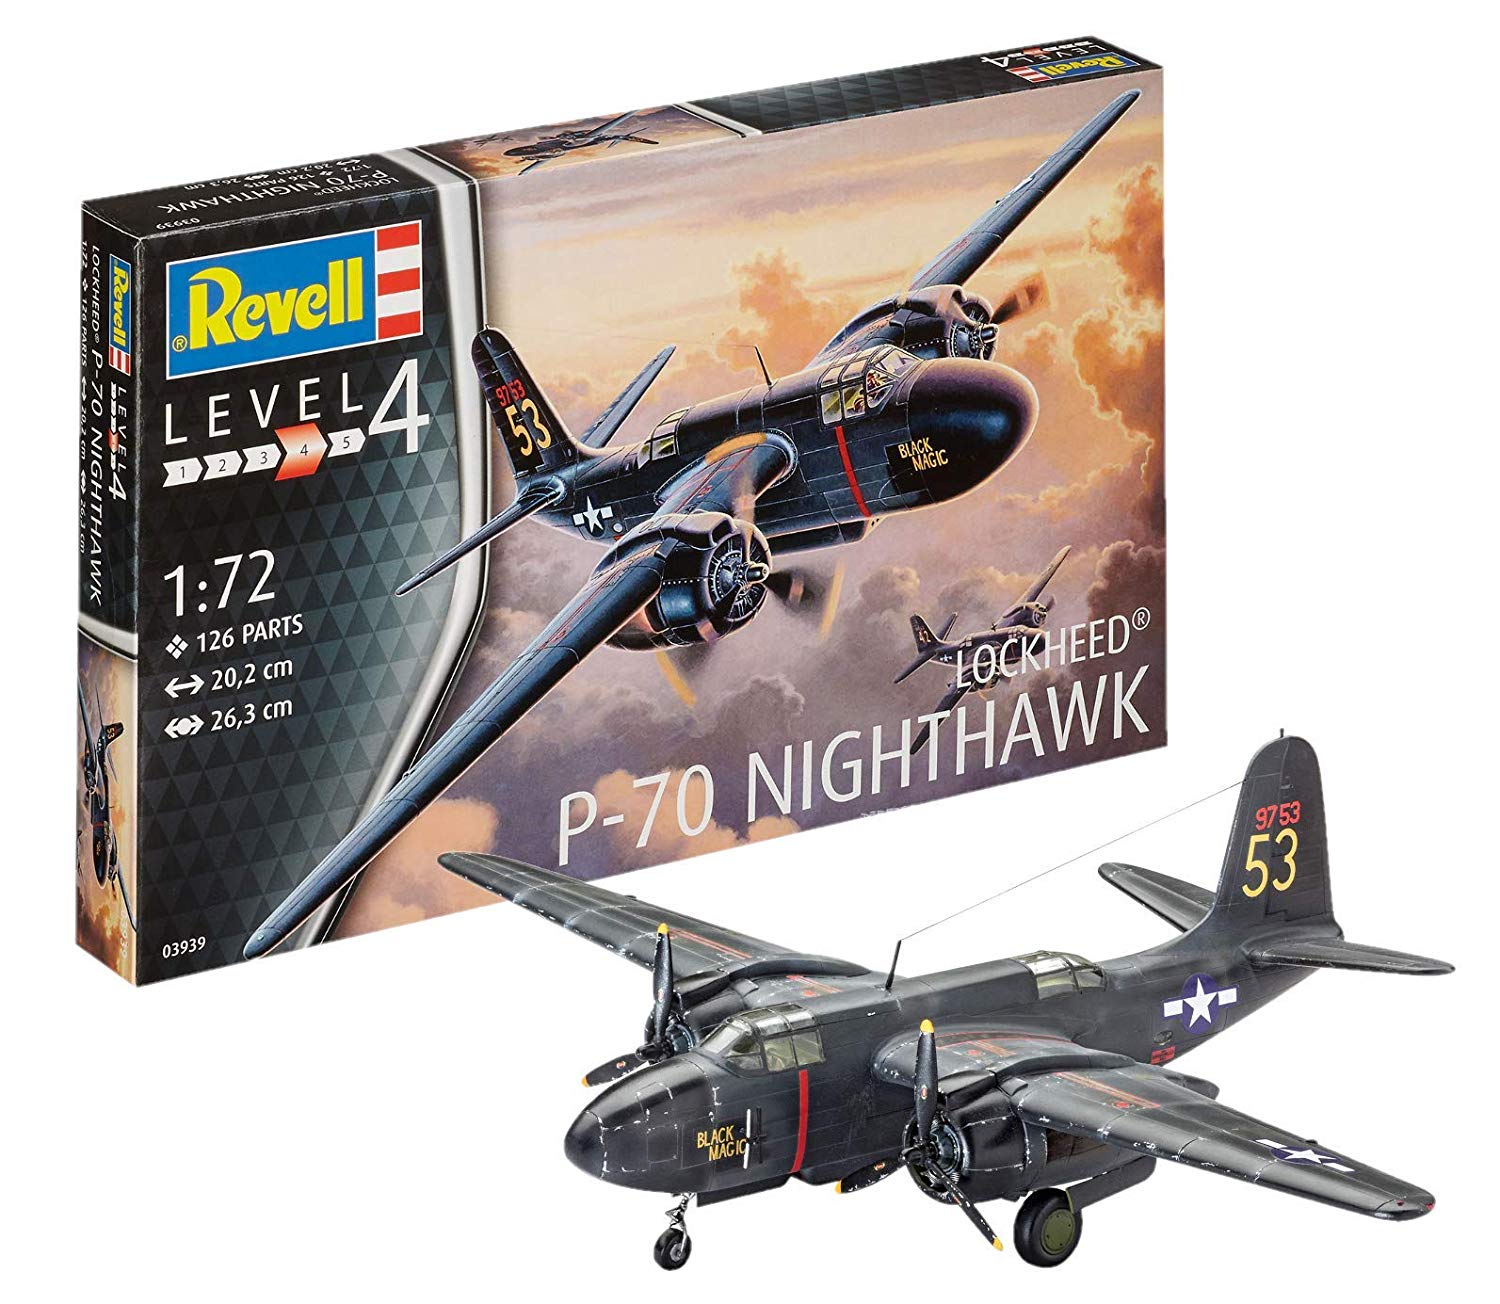 Revell Model Kit 1: 72 – 70 Nighthawk Plane, 1: 72 Scale – Level 4 – Replic